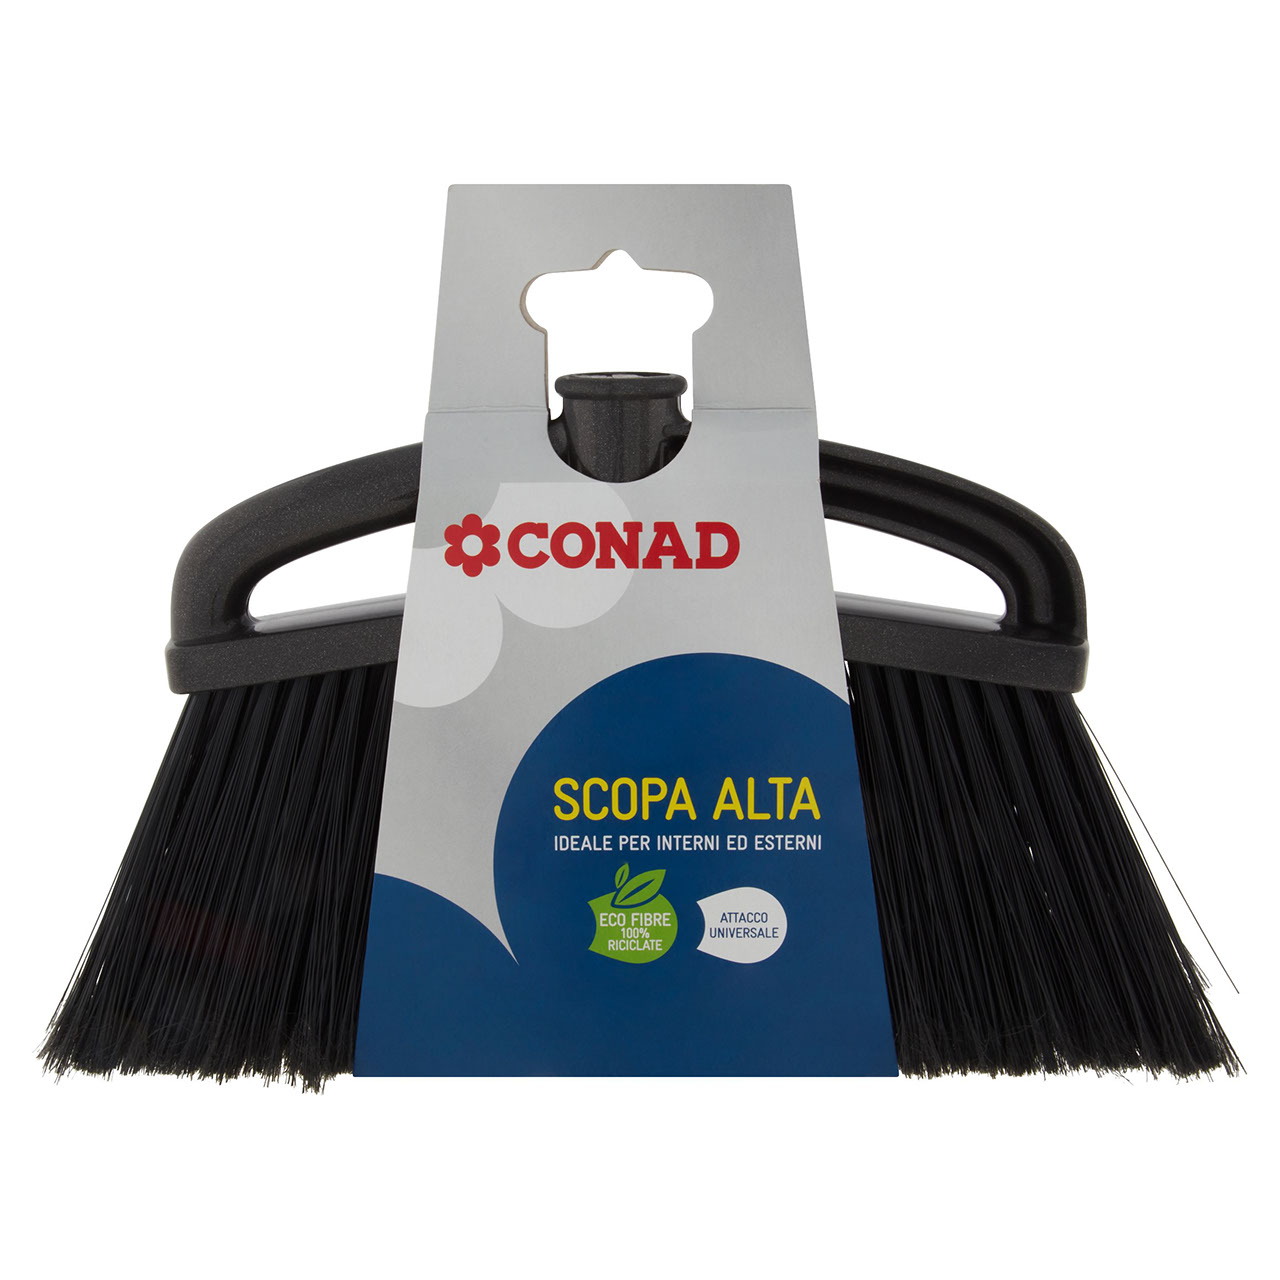 Scopa Alta Conad in vendita online